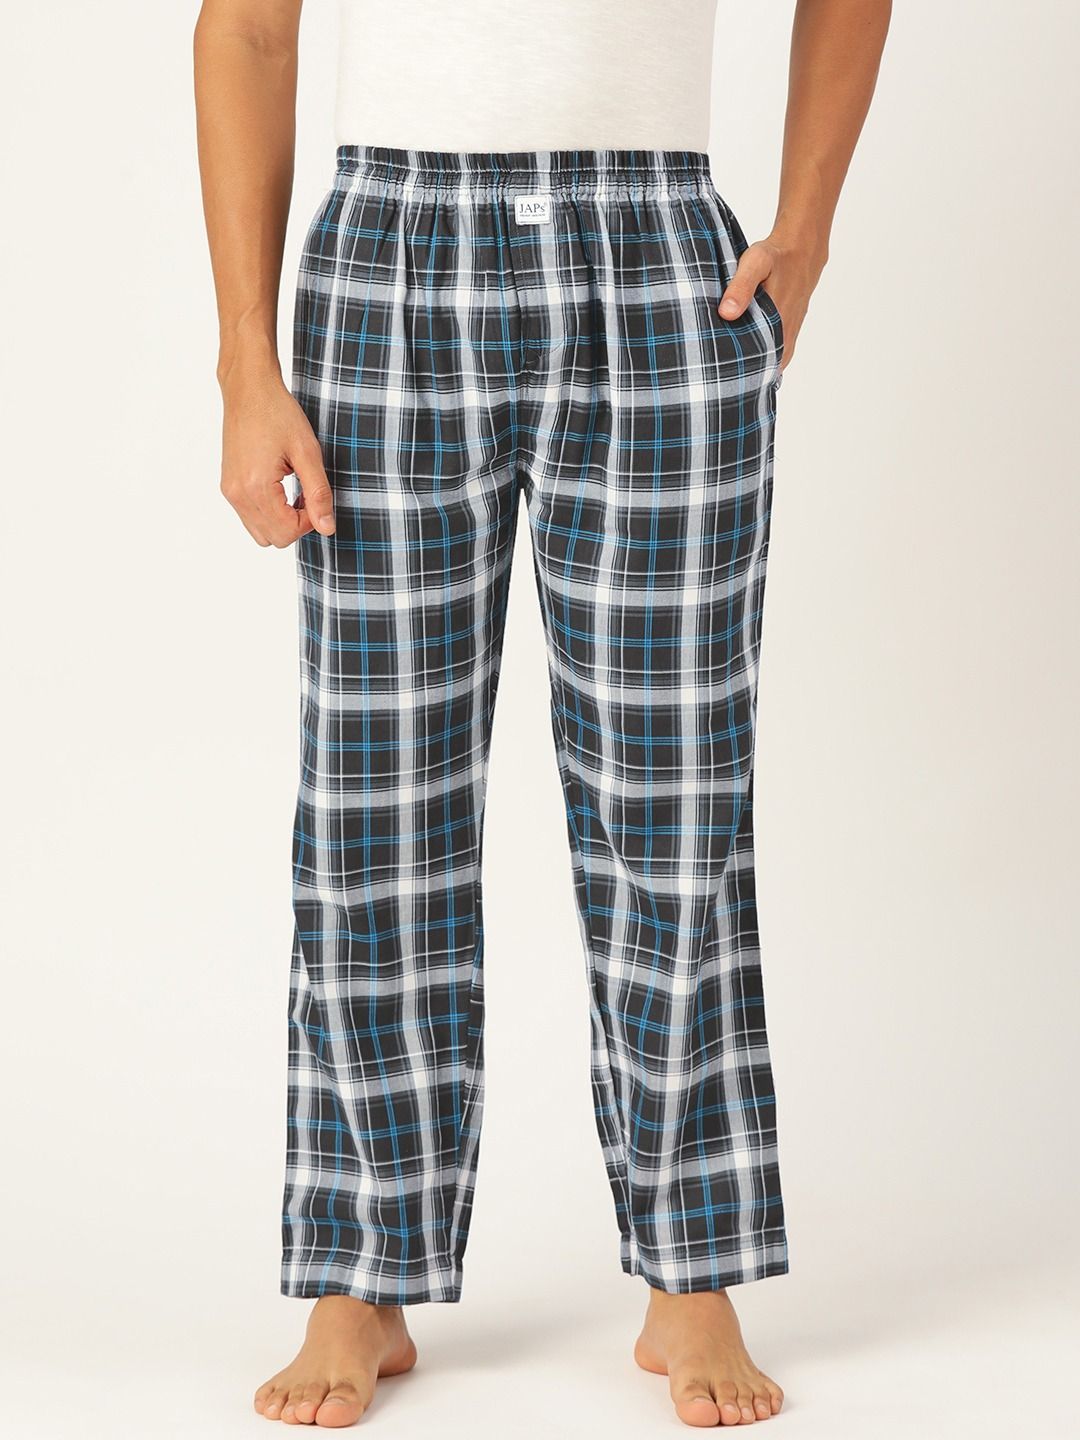 Mens Flannel Pajamas Pants